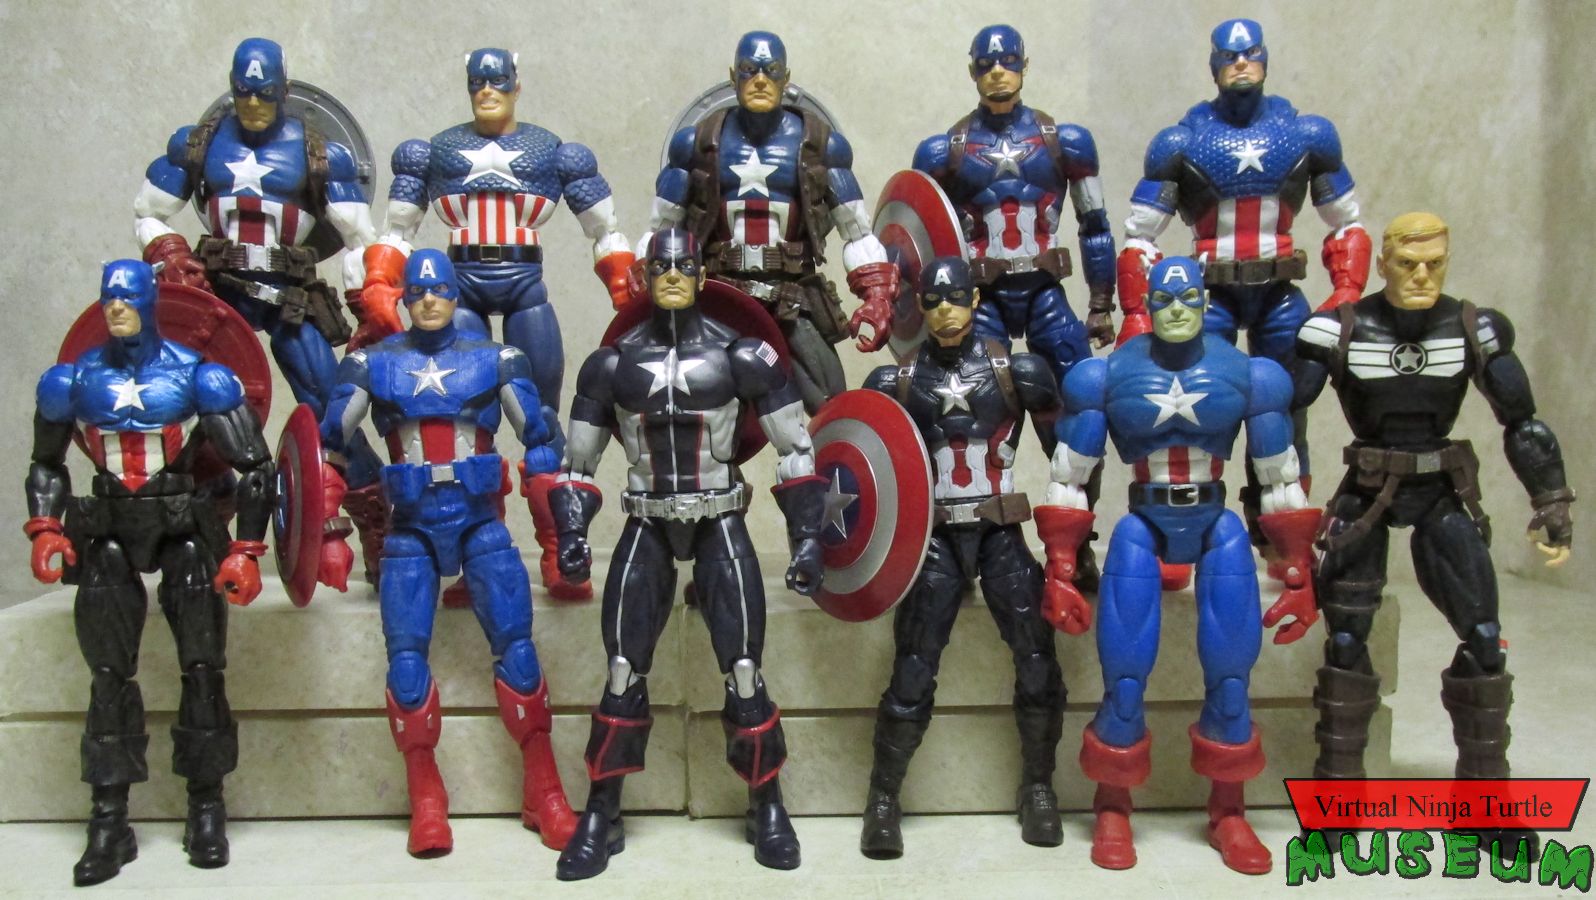 Captain America figures